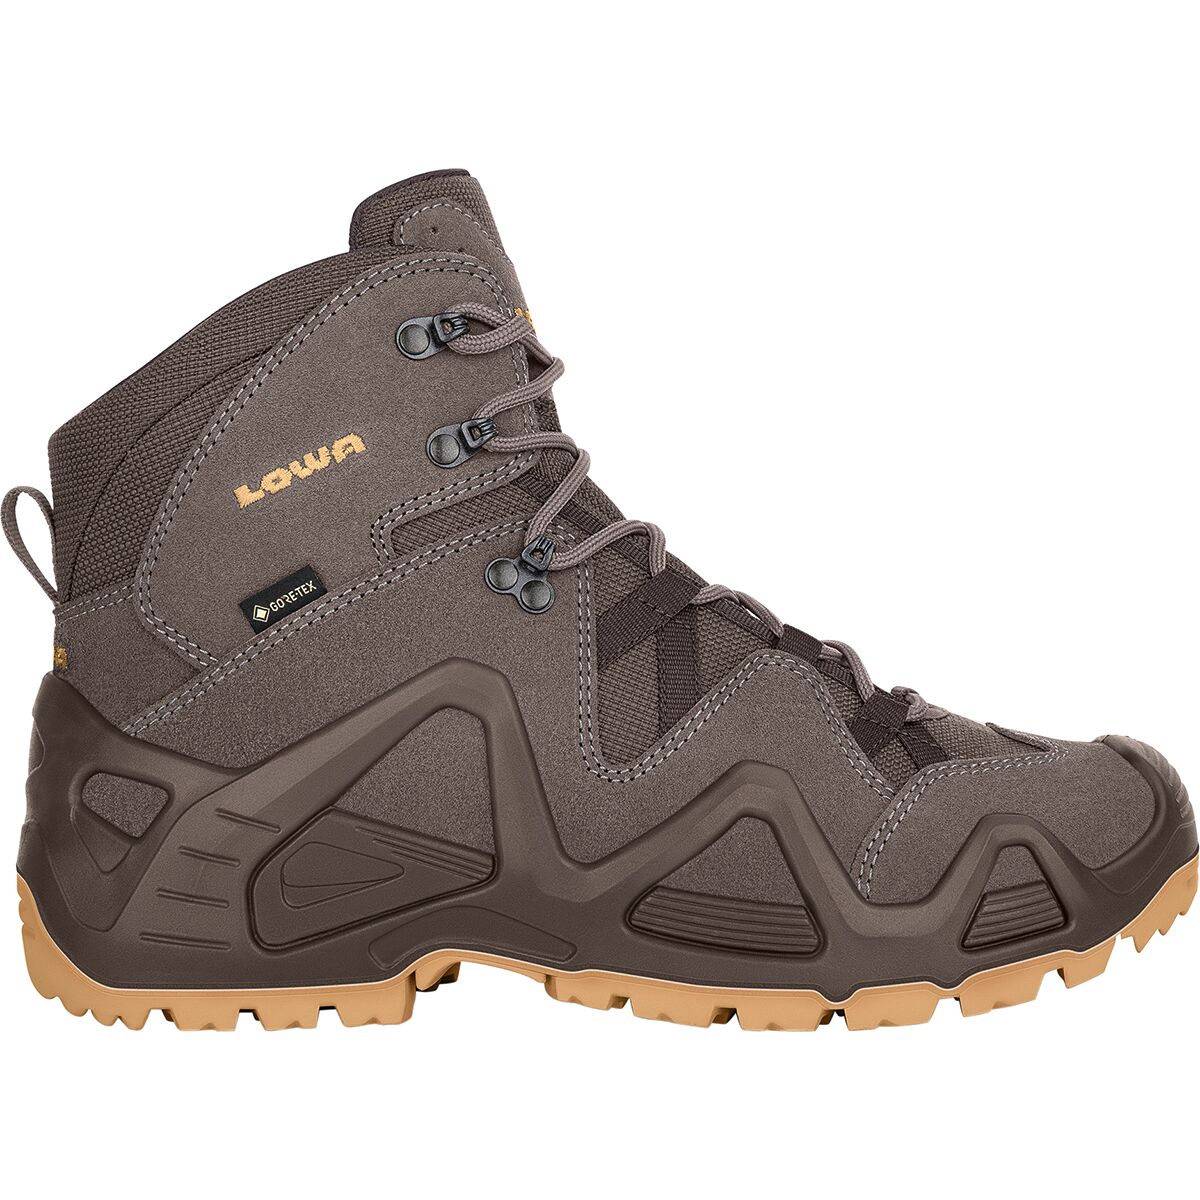 Zephyr GTX Mid TF Hiking Boot - Men